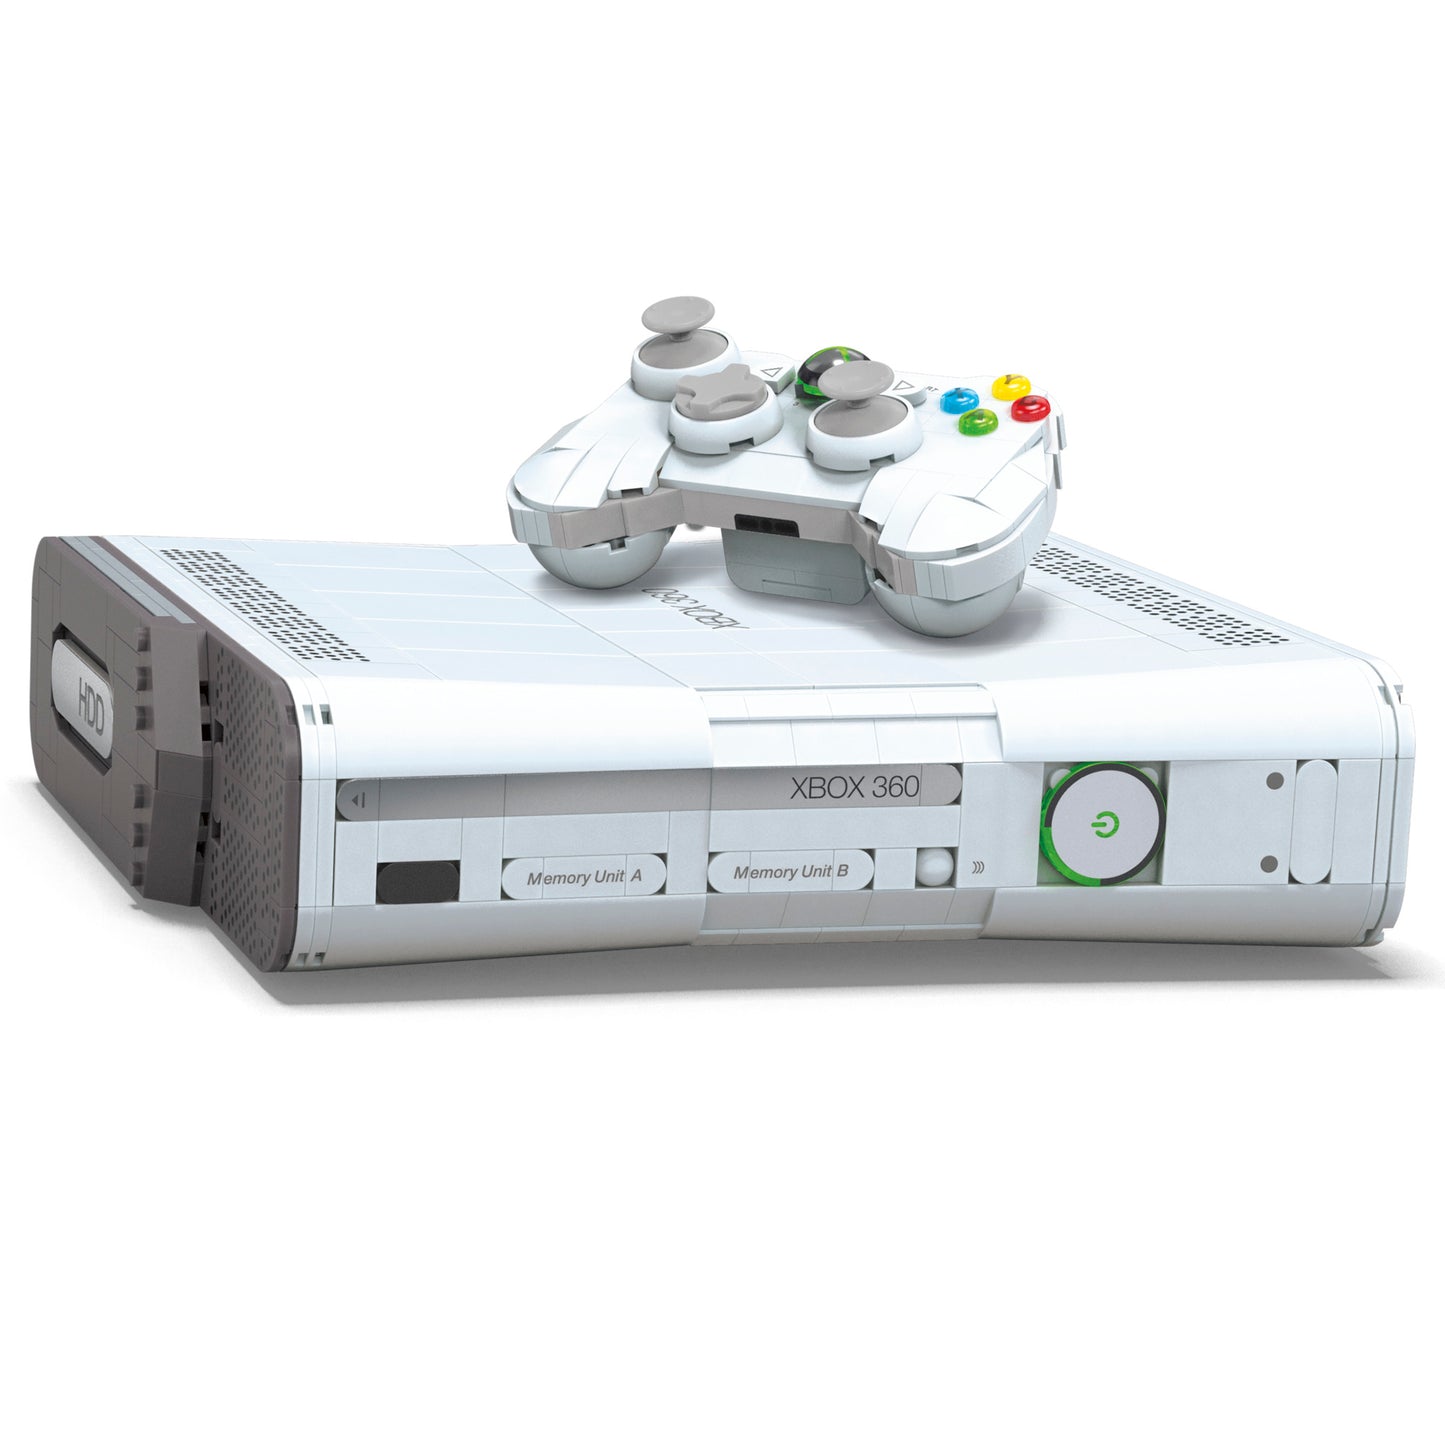 MEGA Showcase Microsoft Xbox 360